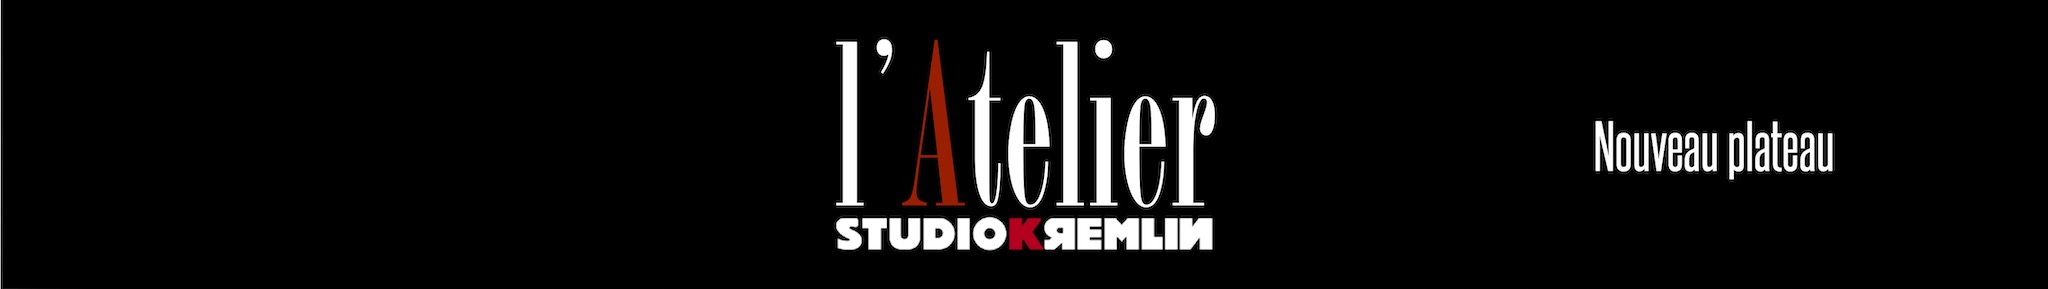 Studio Kremlin - L'Atelier